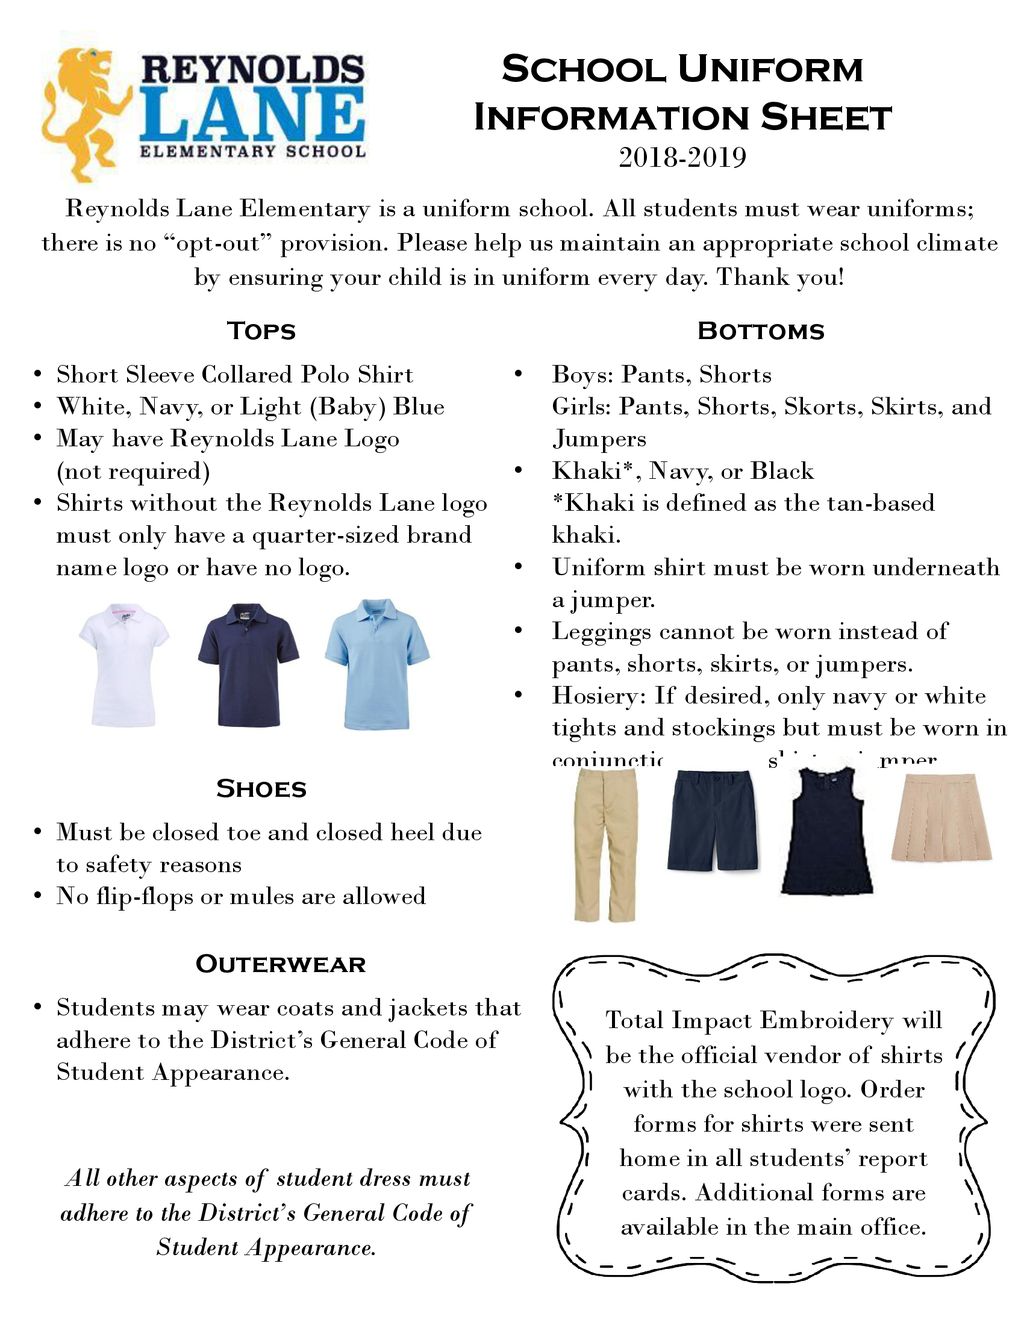 School Uniform Information Sheet - ppt download